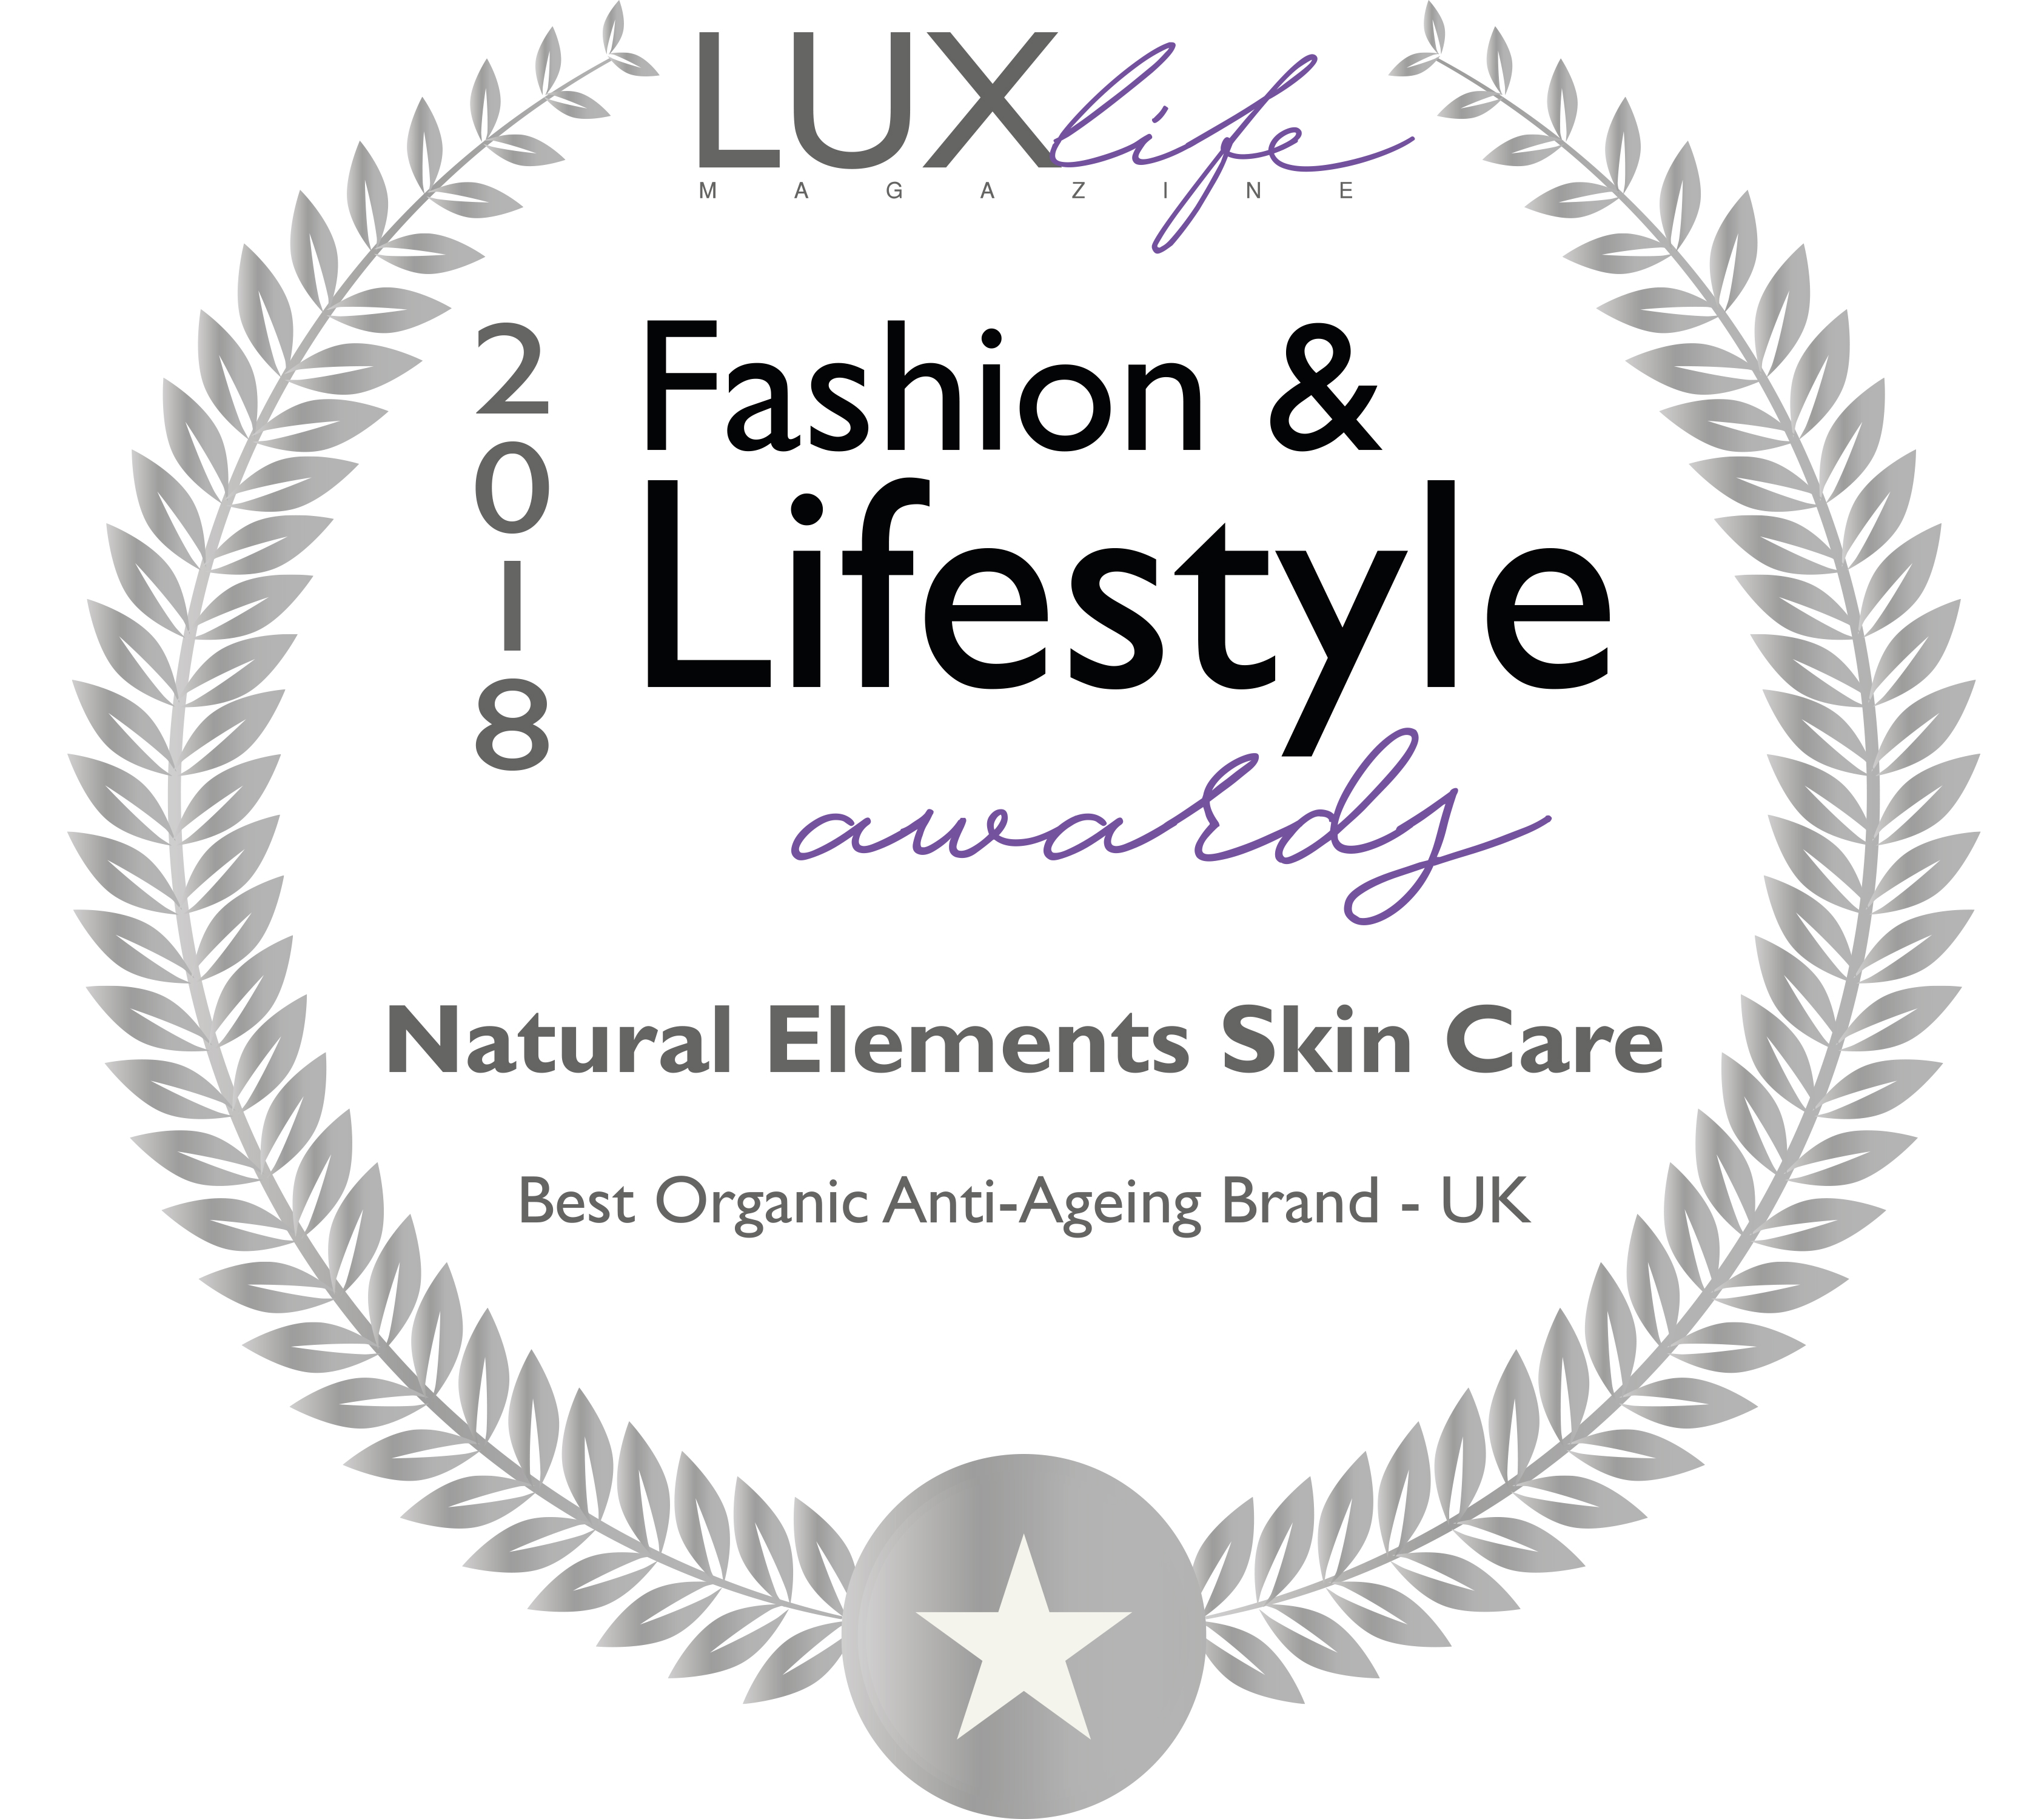 fal18024-lux-fashion-lifestyle-award-winners-logo-002-.jpg